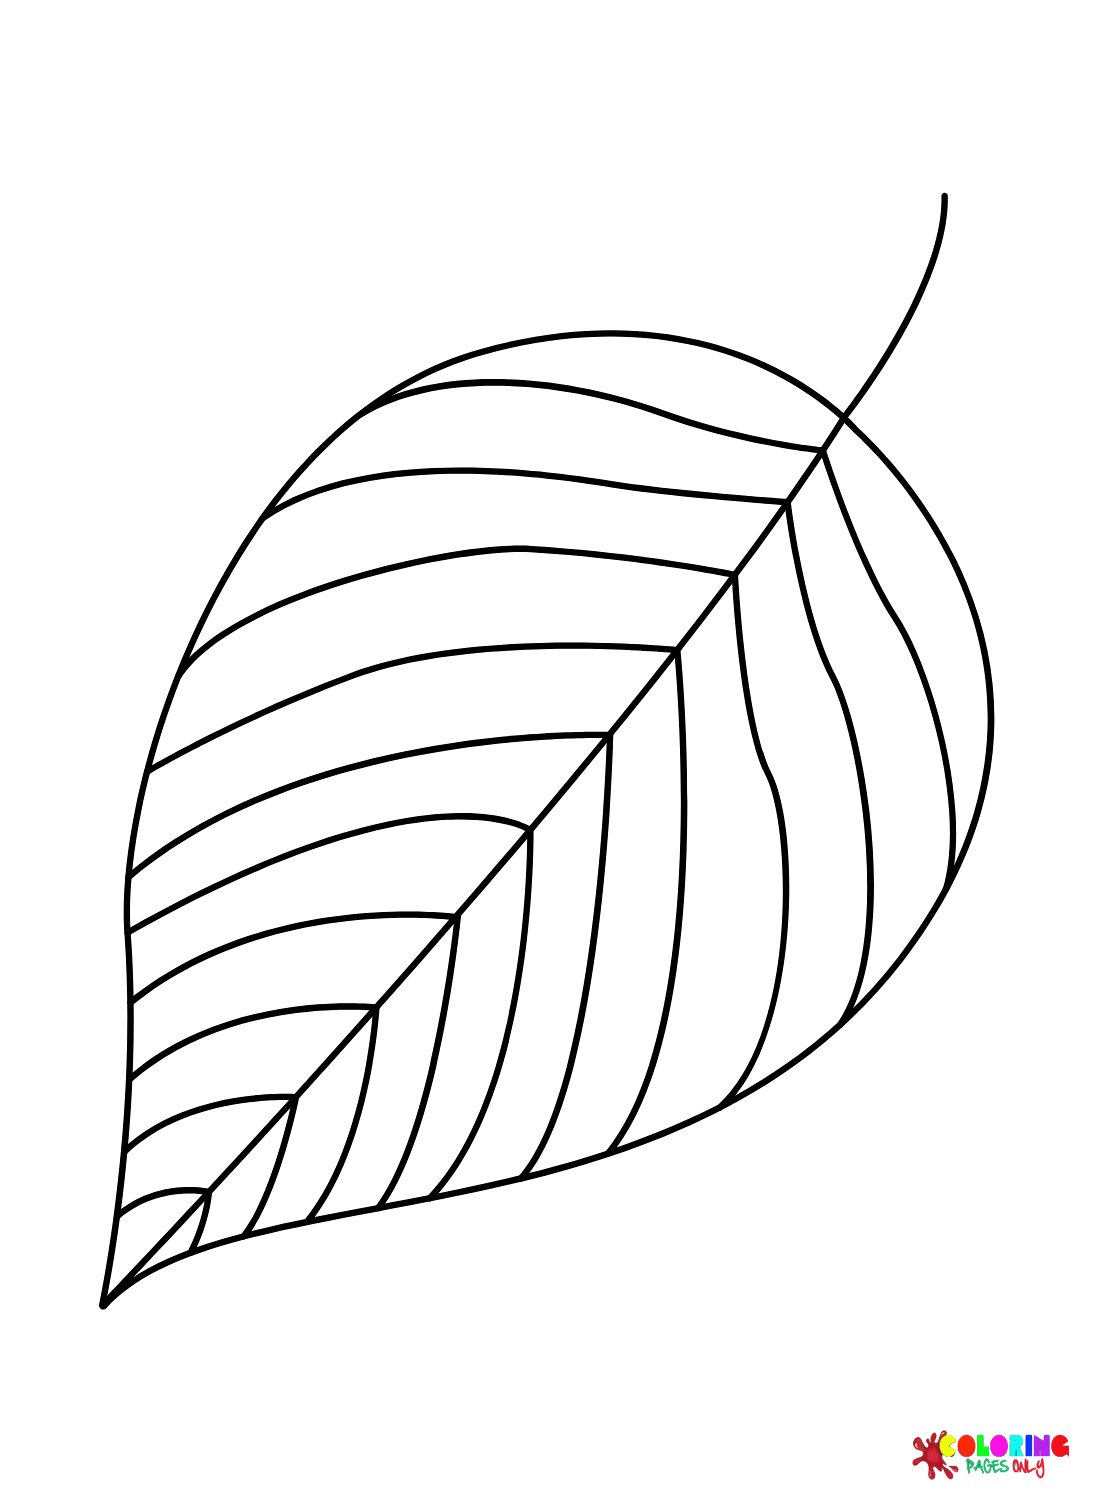 European Ash Leaf from Leaves